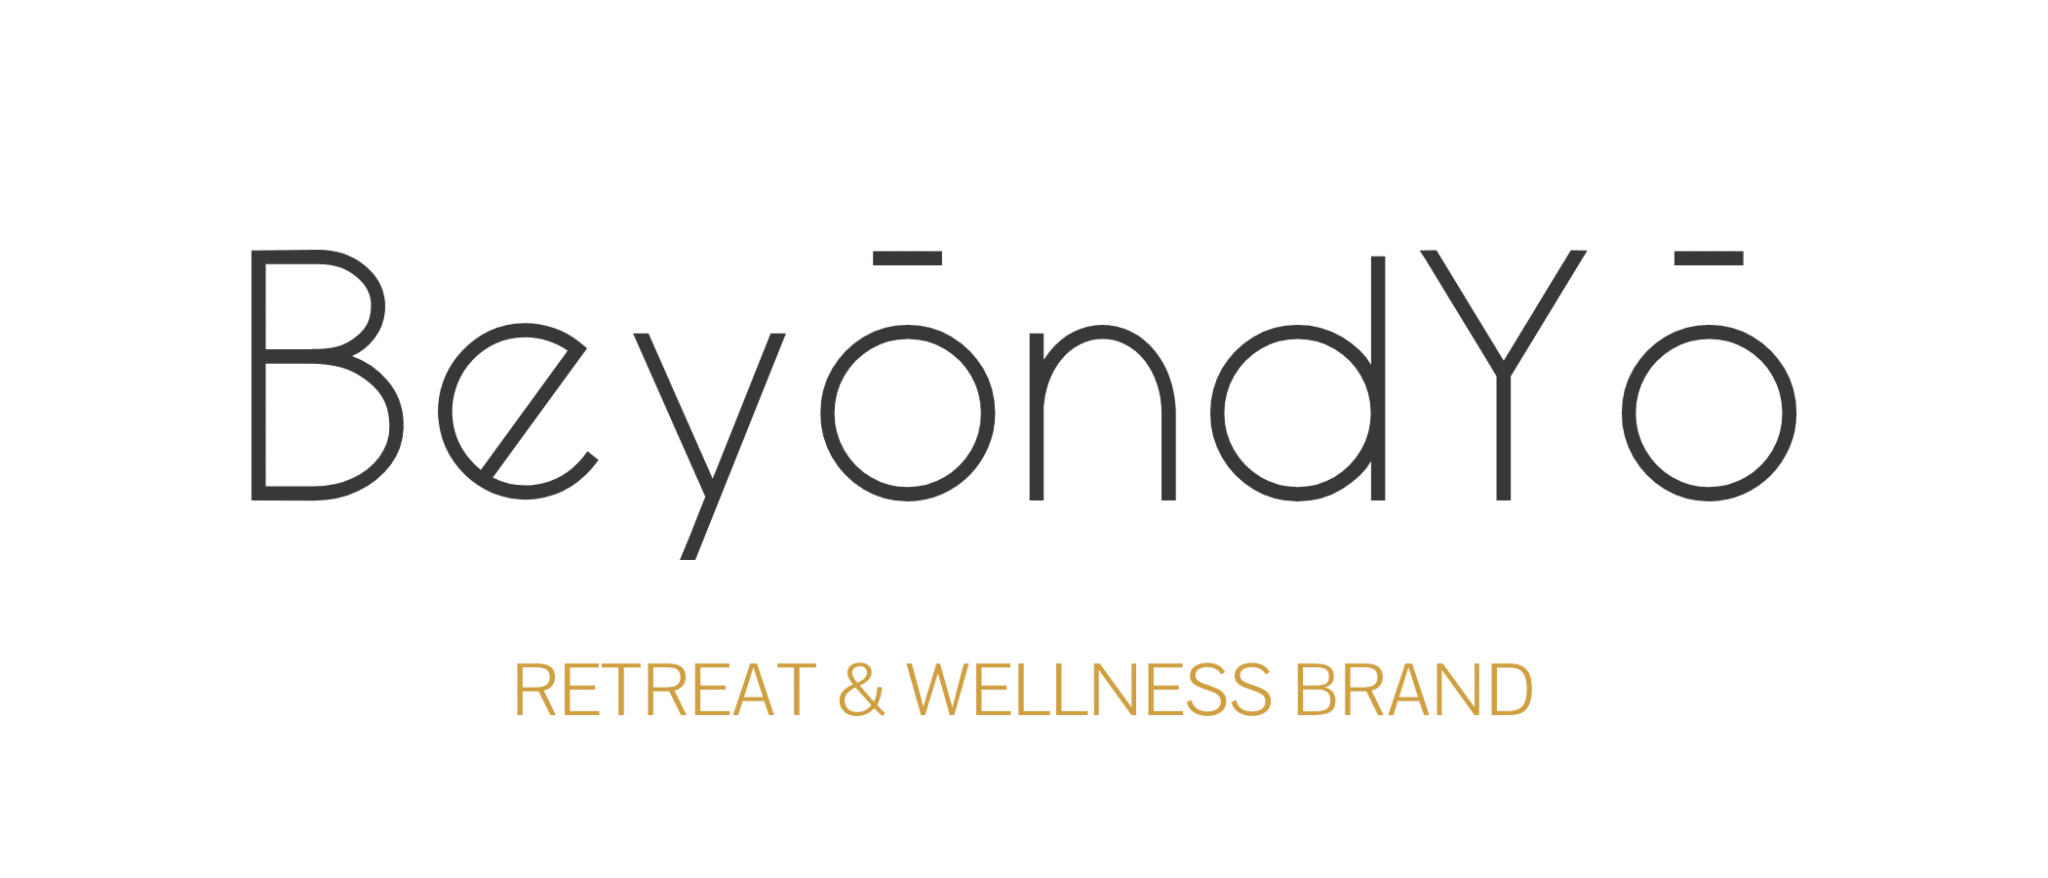 BeyondYo Retreats & Wellness Brand for Women